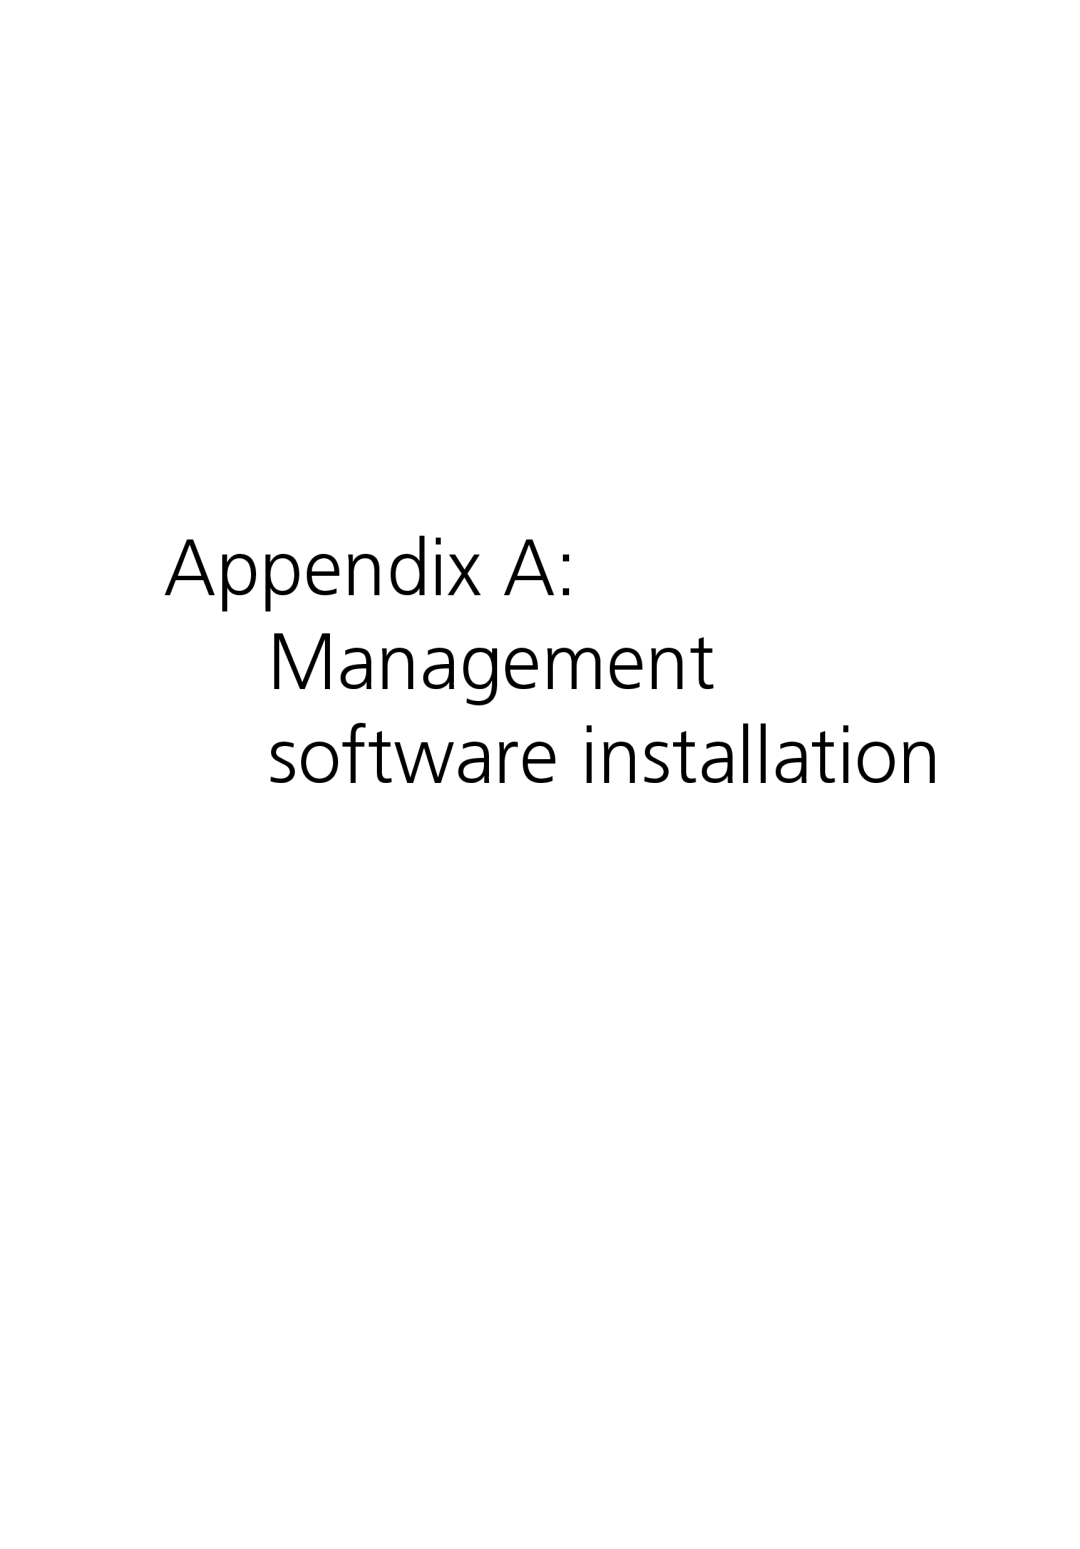 Acer Altos R710 manual Appendix A Management software installation 